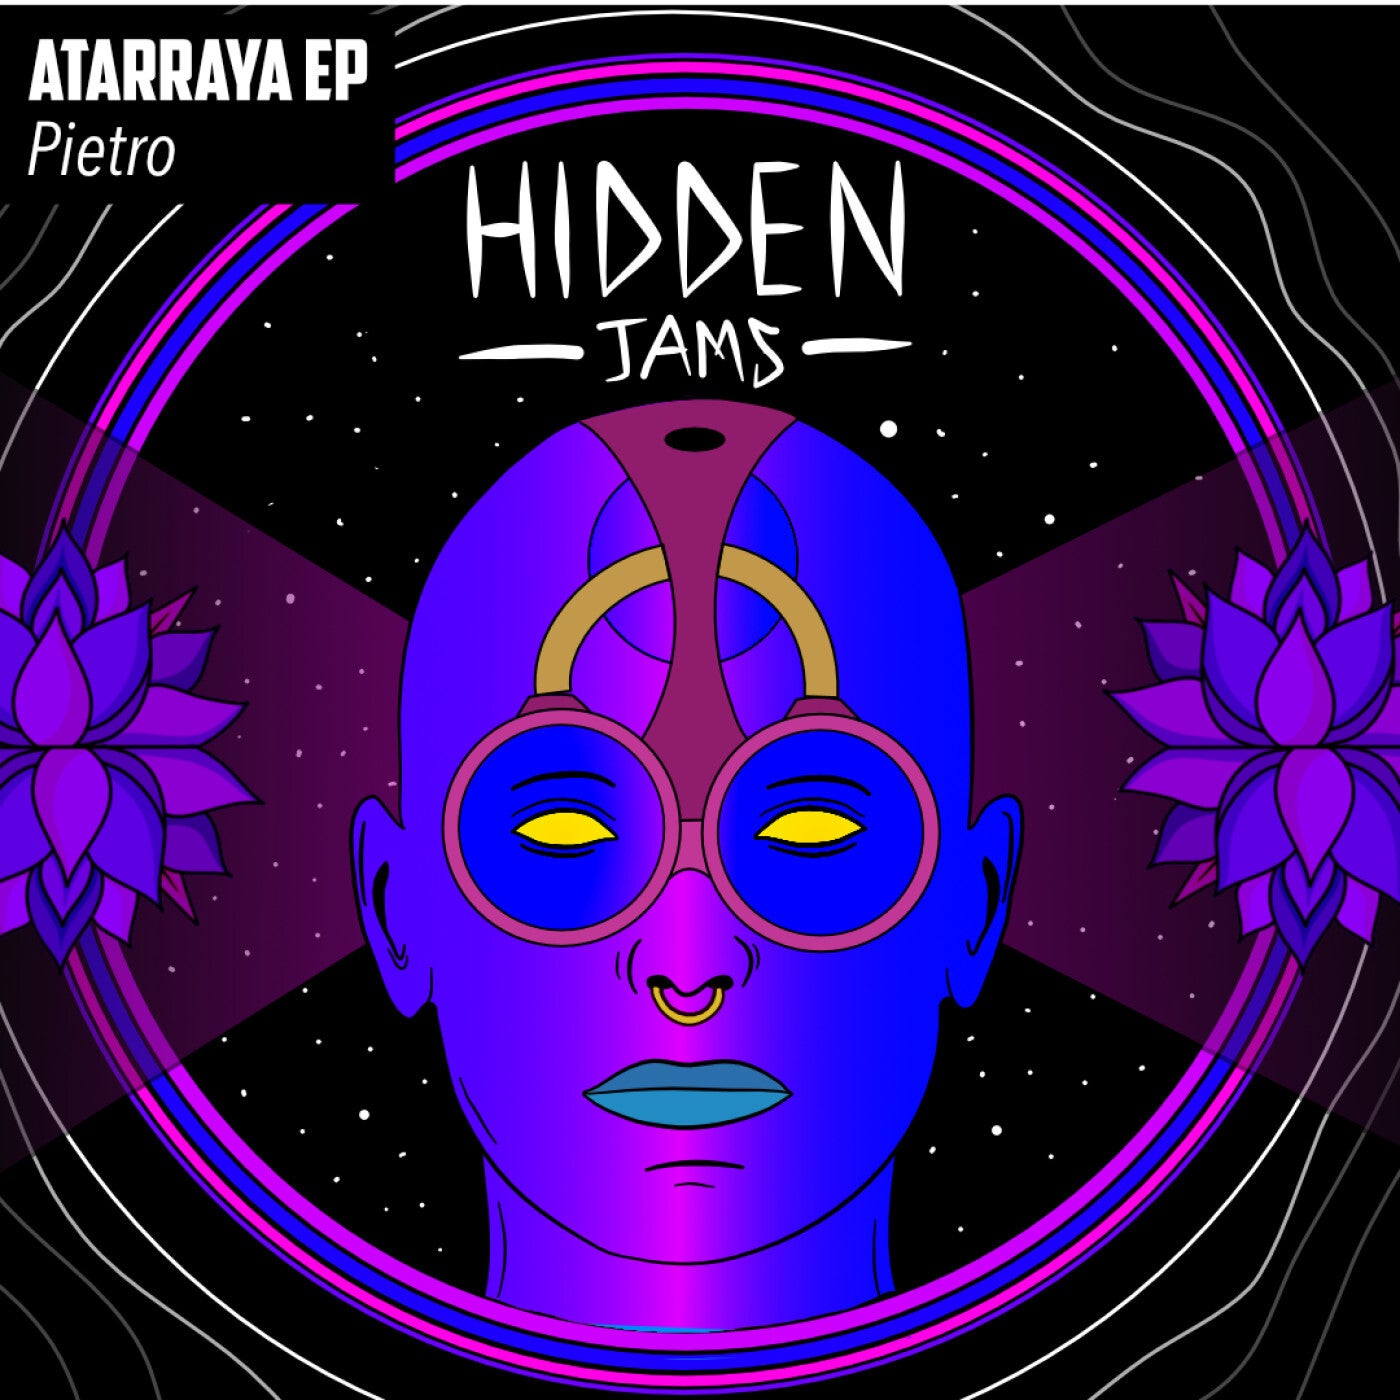 Pietro, Anzzo - Atarraya EP [Hidden Jams]